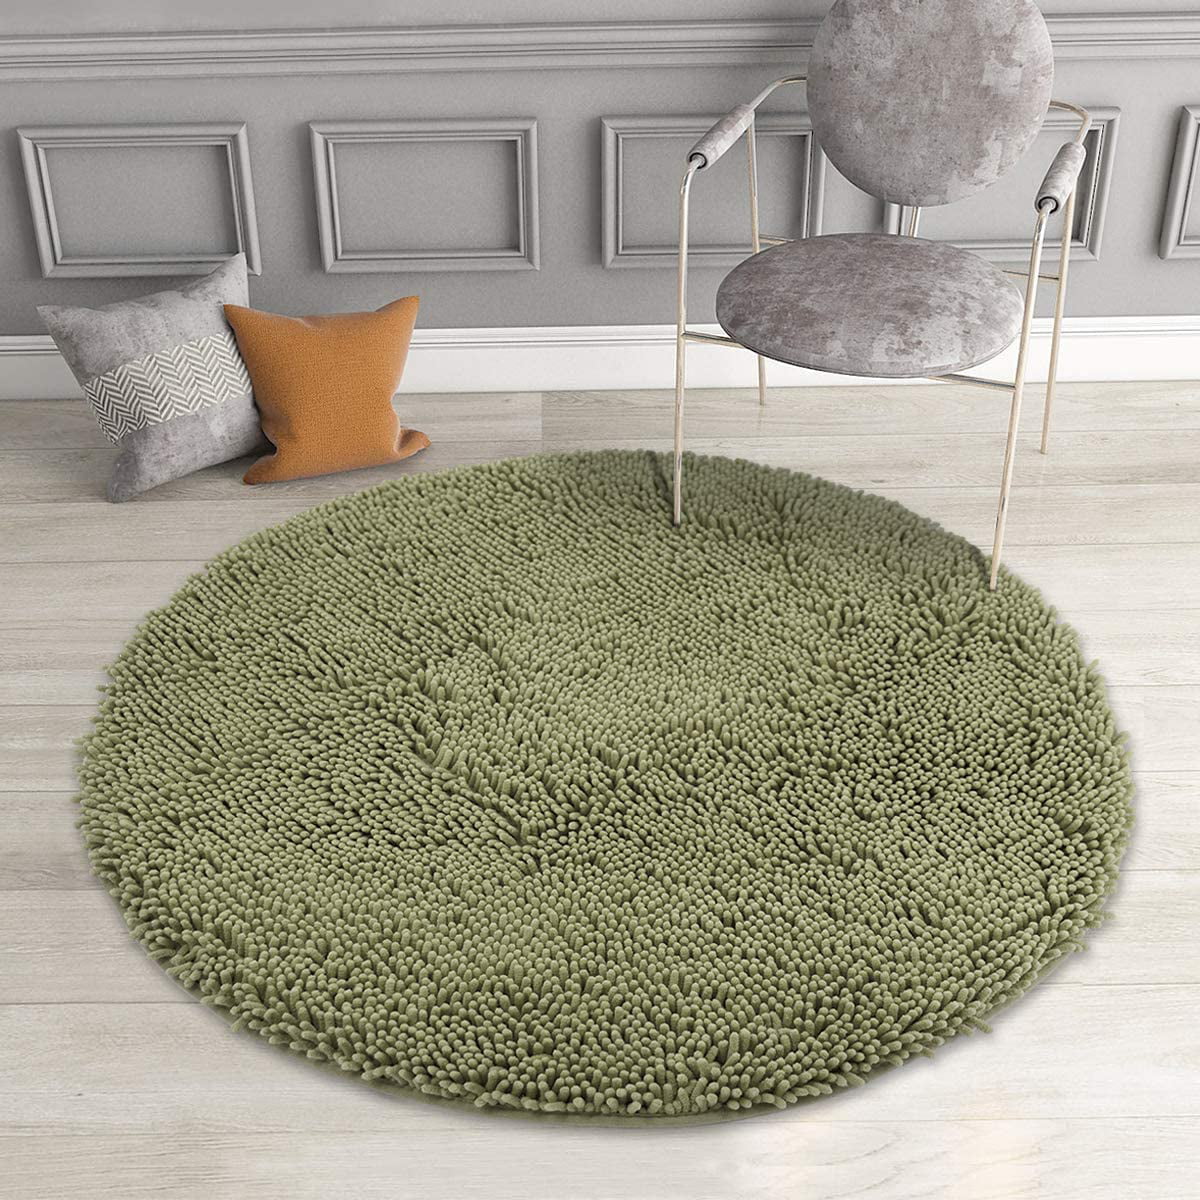 Round Non-slip Chenille Absorbent Carpet Bath Mat Living Room Bedroom Area Rug 